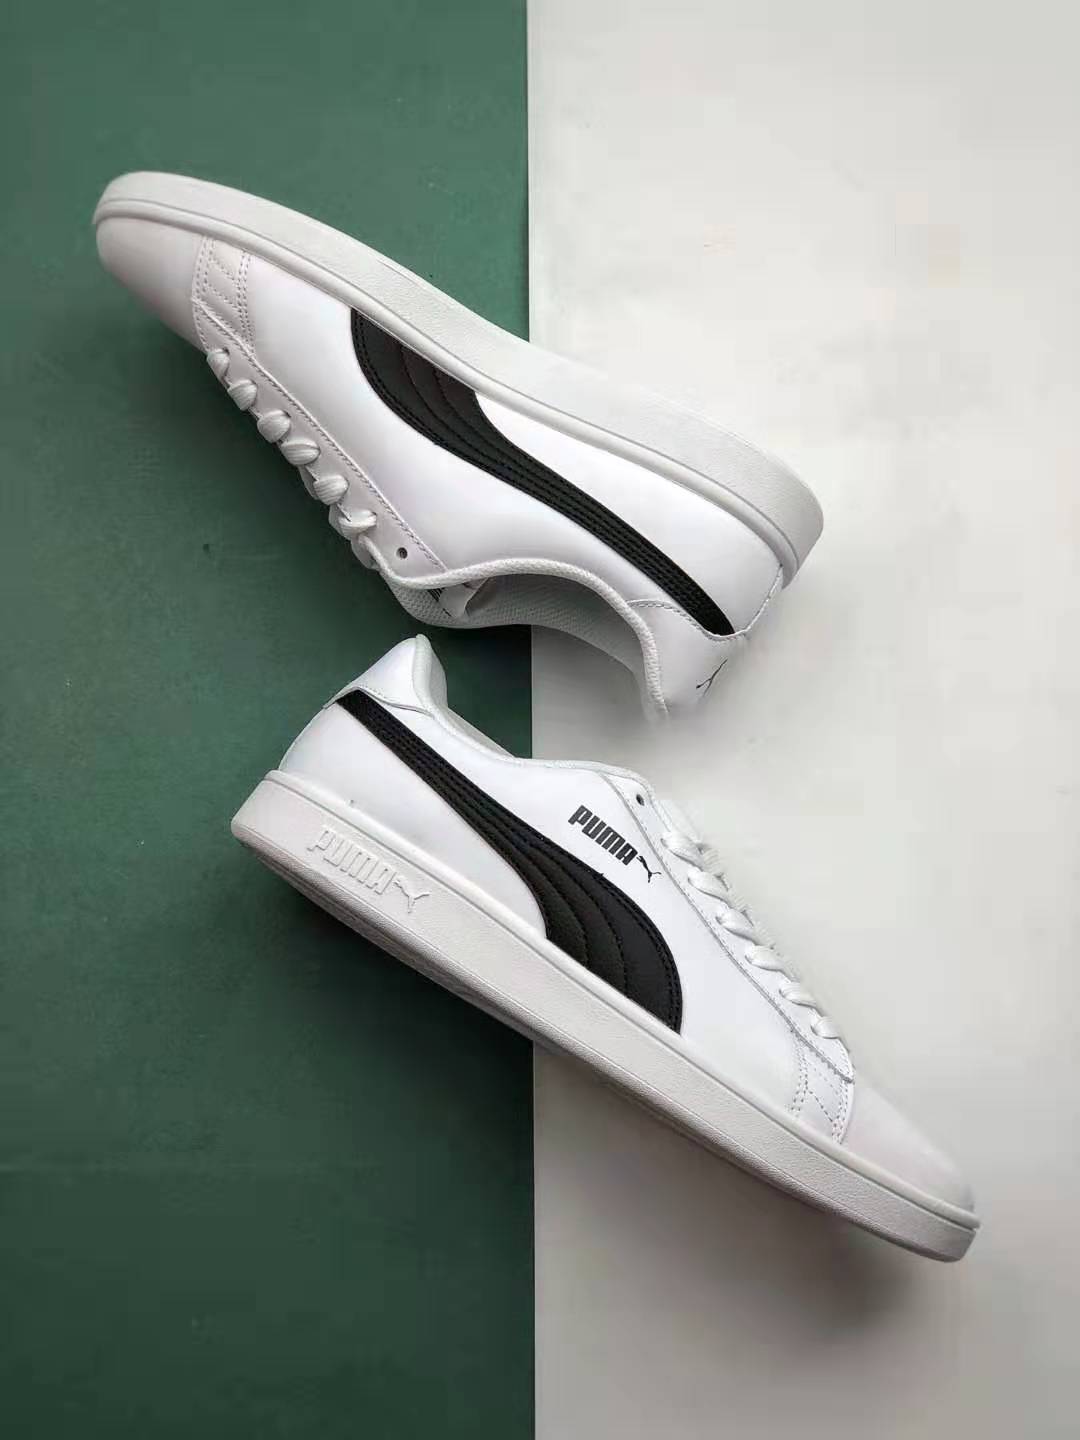 PUMA Smash V2 'White Black' 365215-01 - Sleek and Stylish Sneakers for Men - [Website Name]